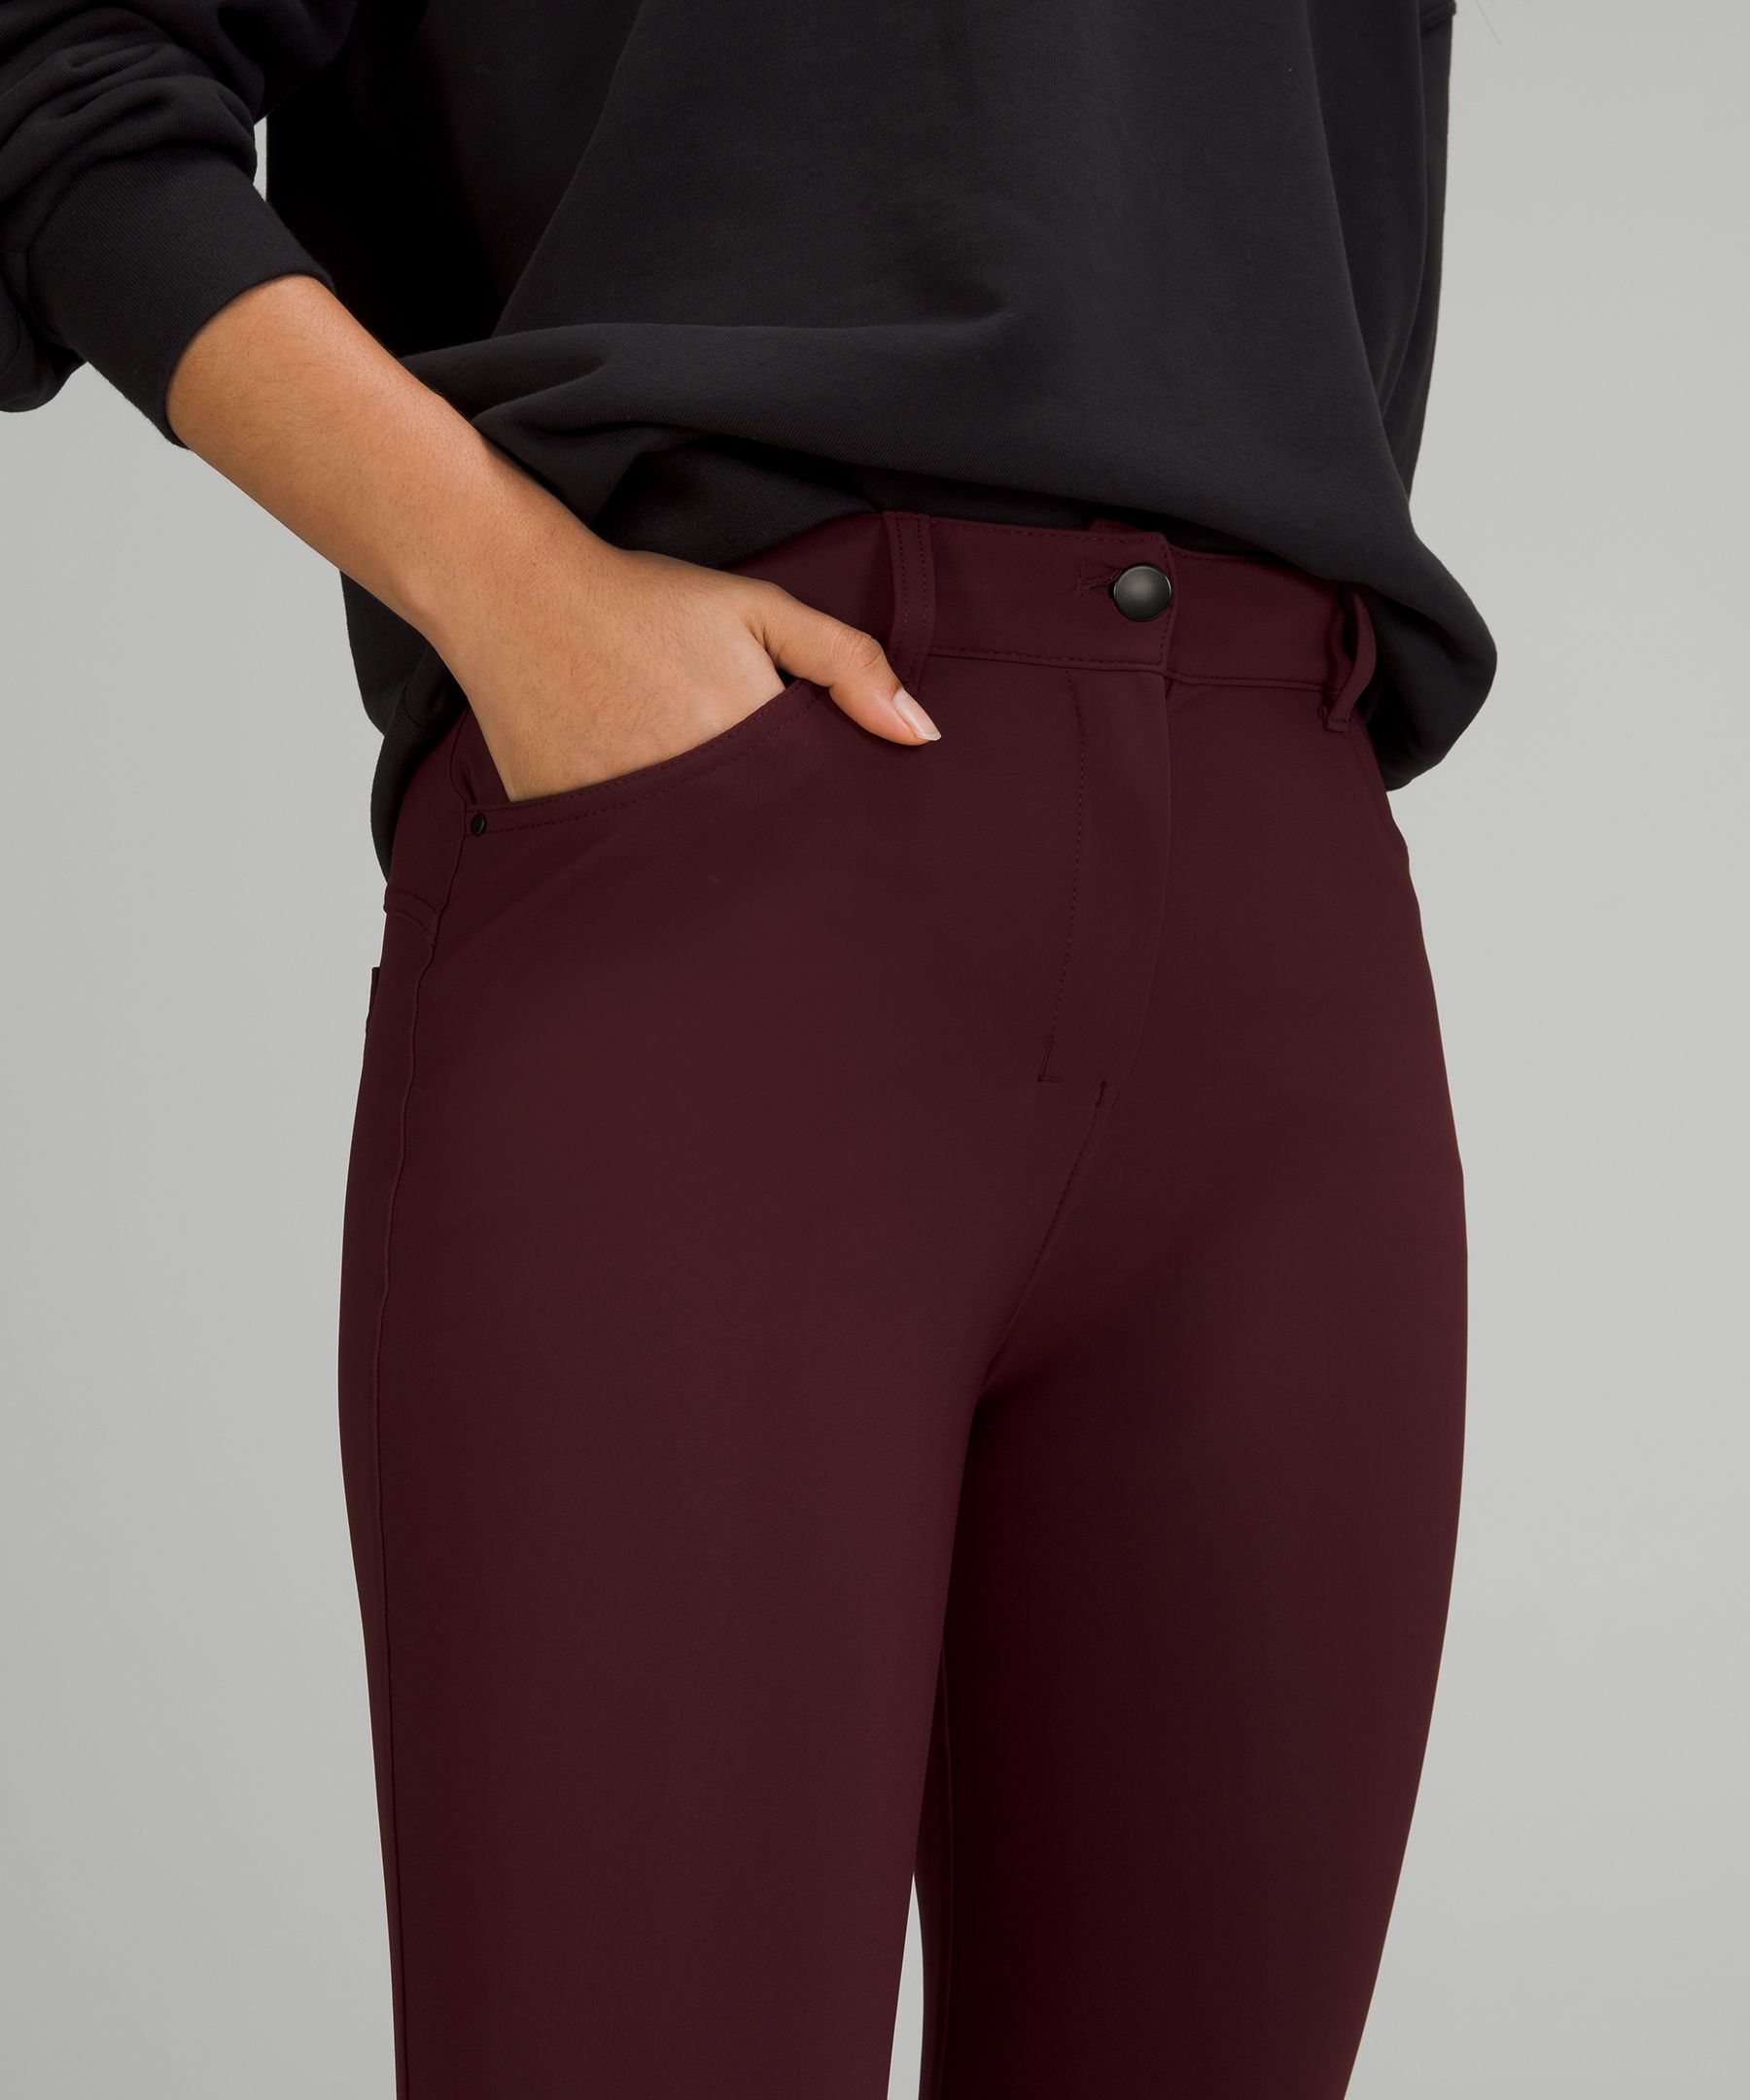 City Sleek Slim-Fit 5 Pocket High-Rise Pant